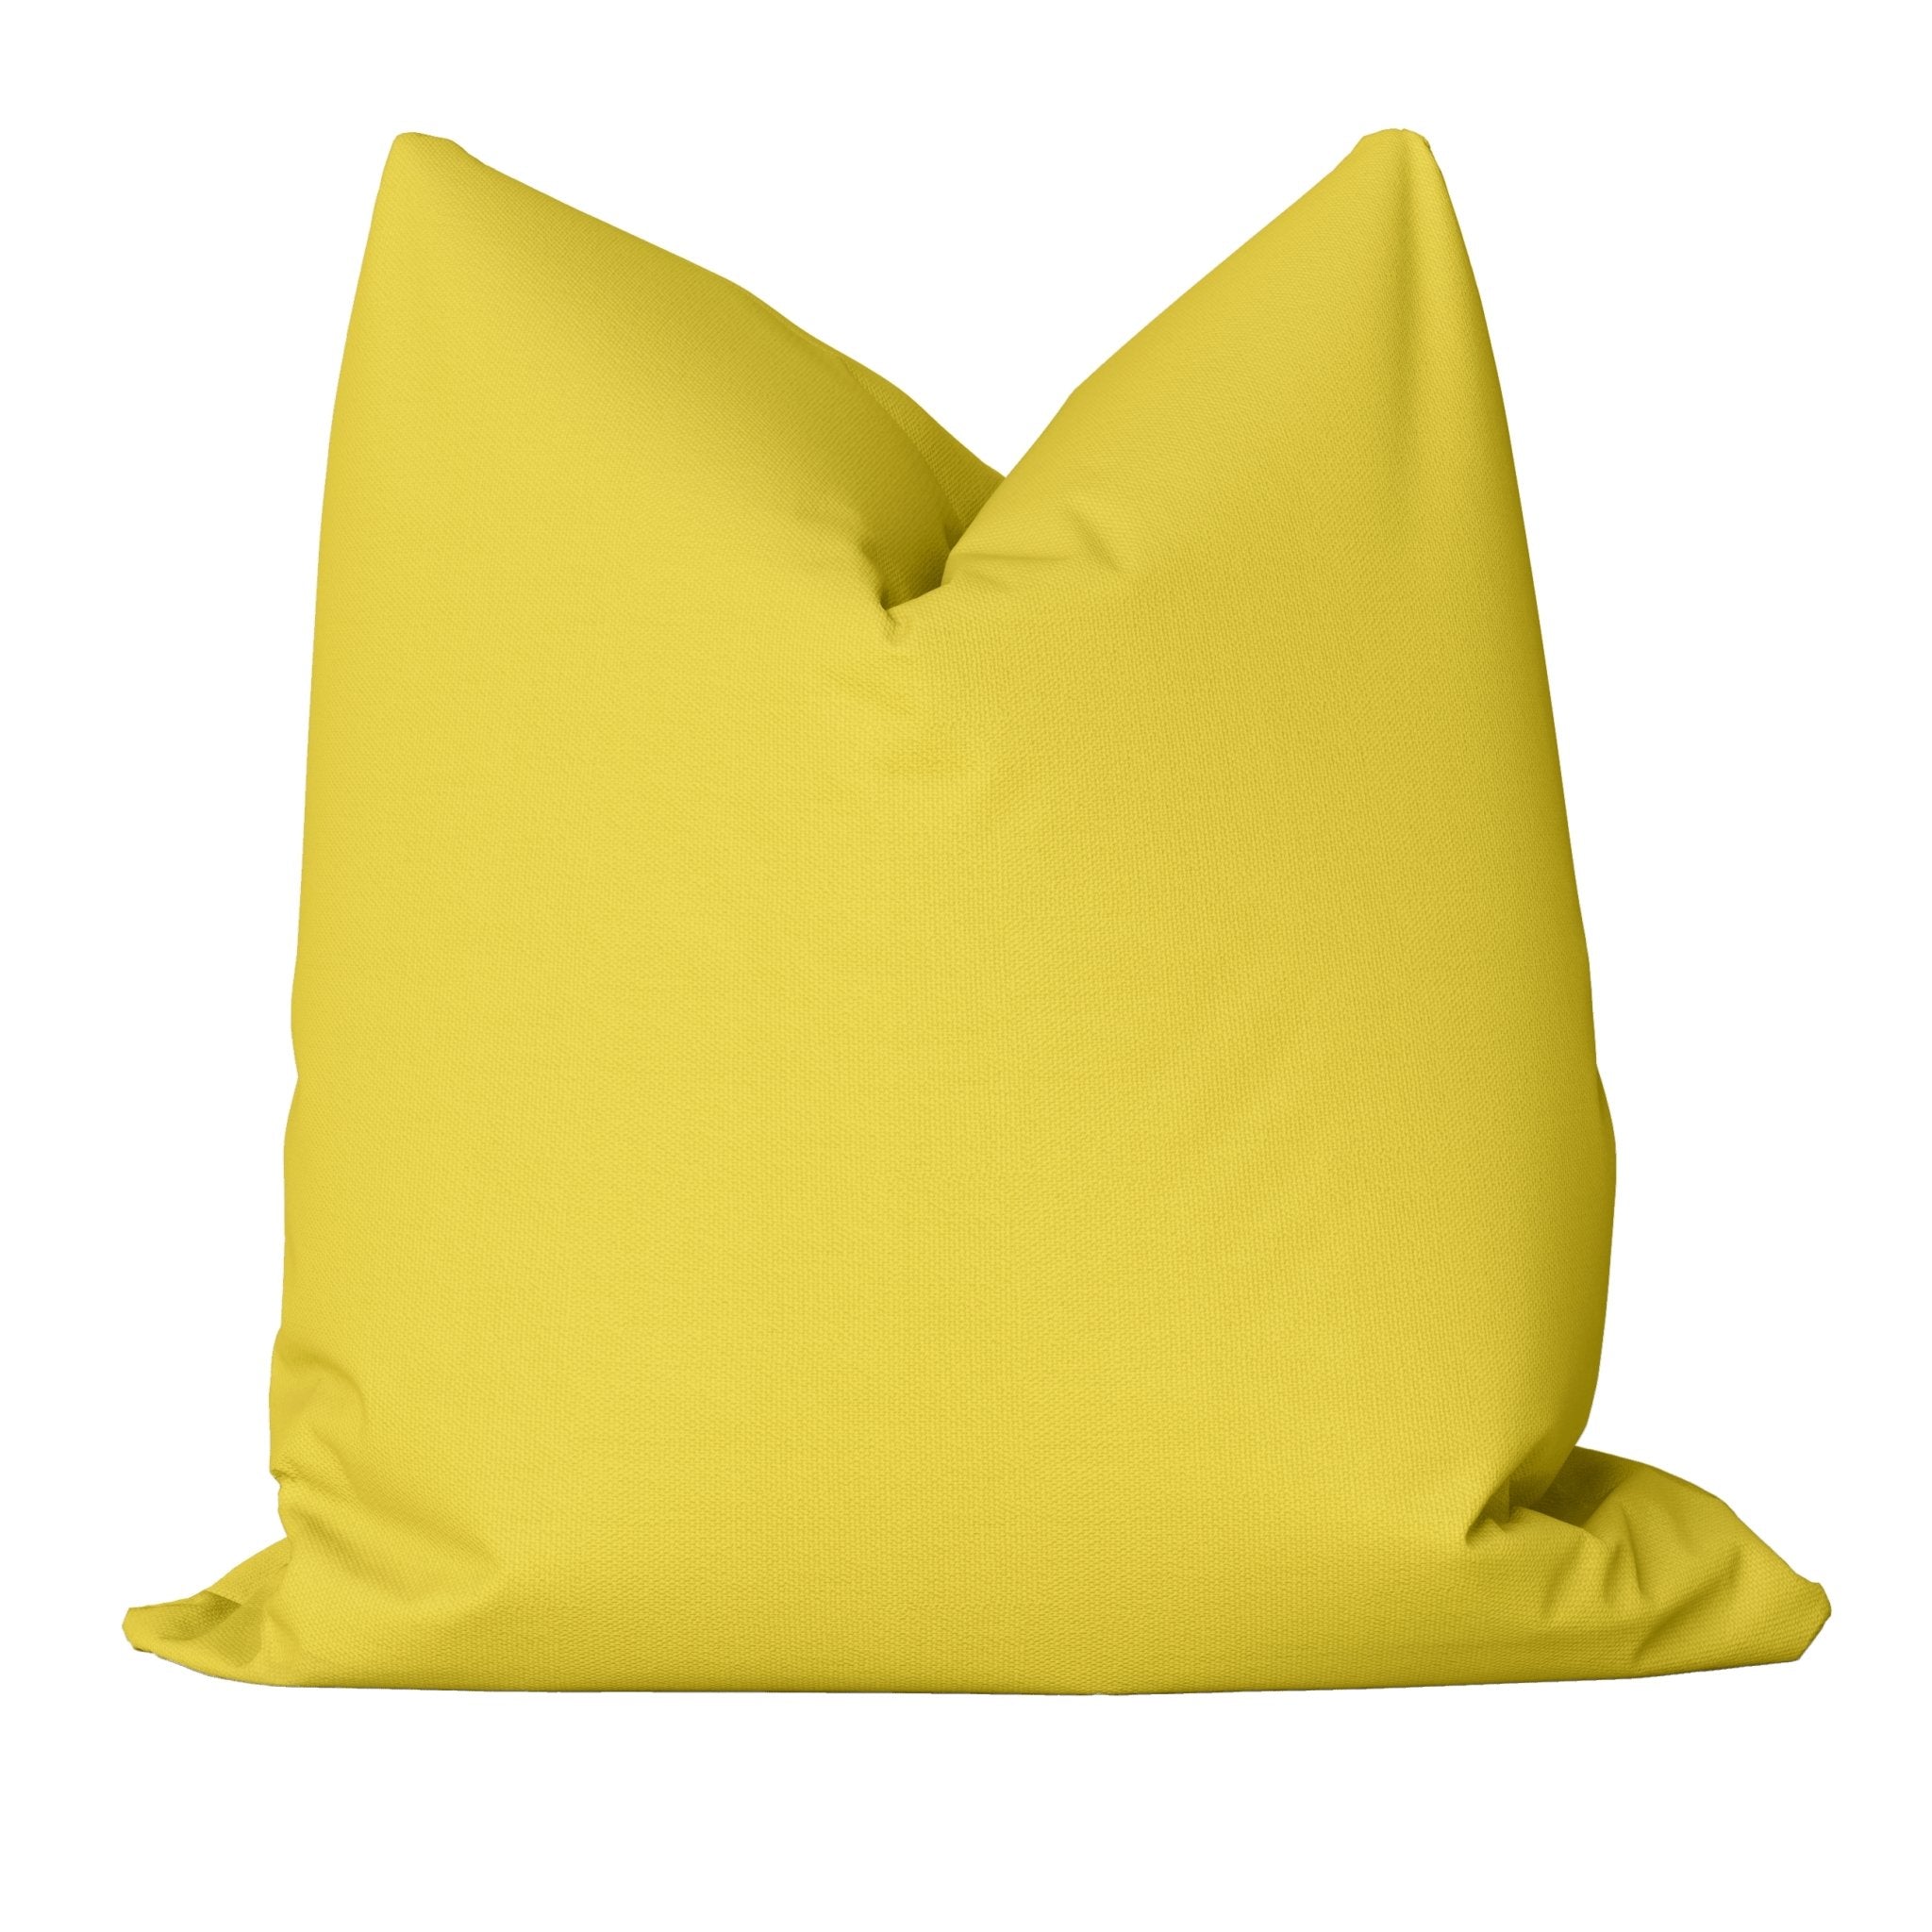 Layla Sofa Pillow Cover Set in Illuminating